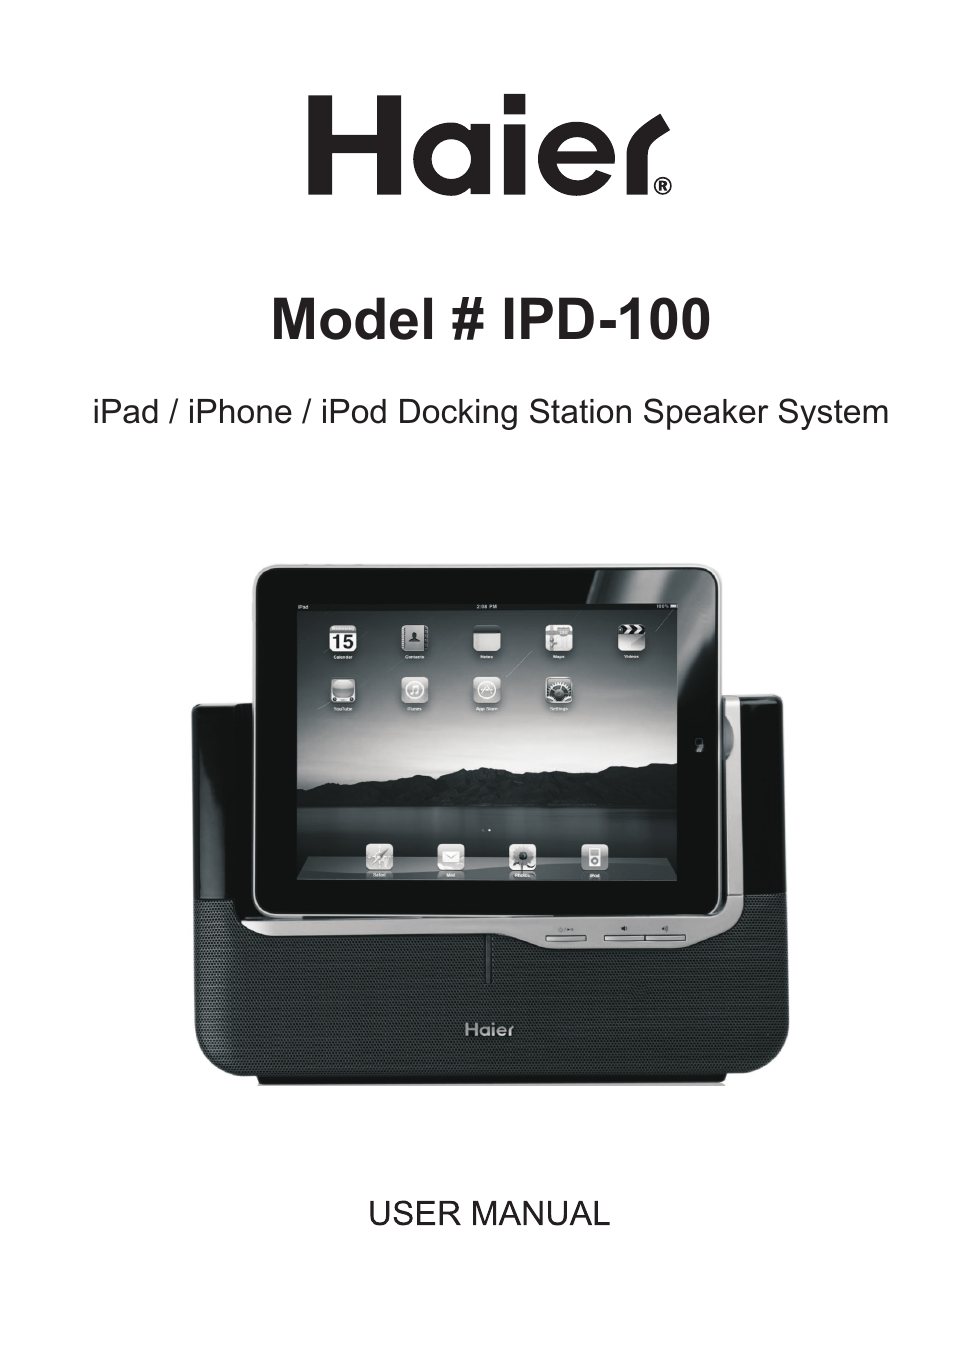 IPD-100